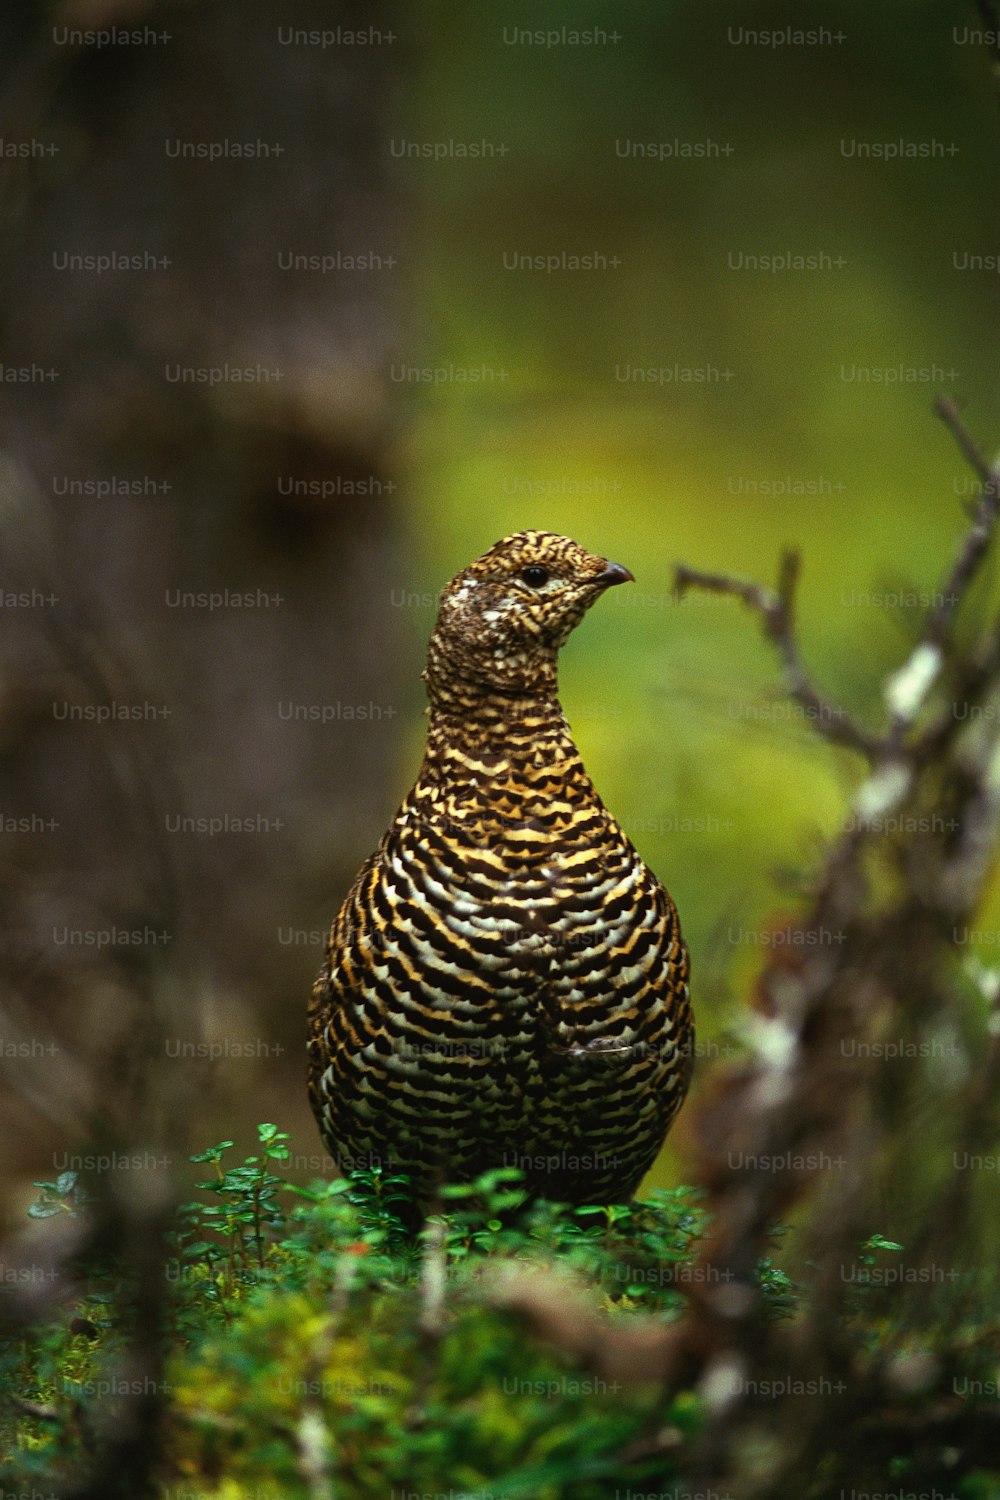 a bird standing on top of a lush green field